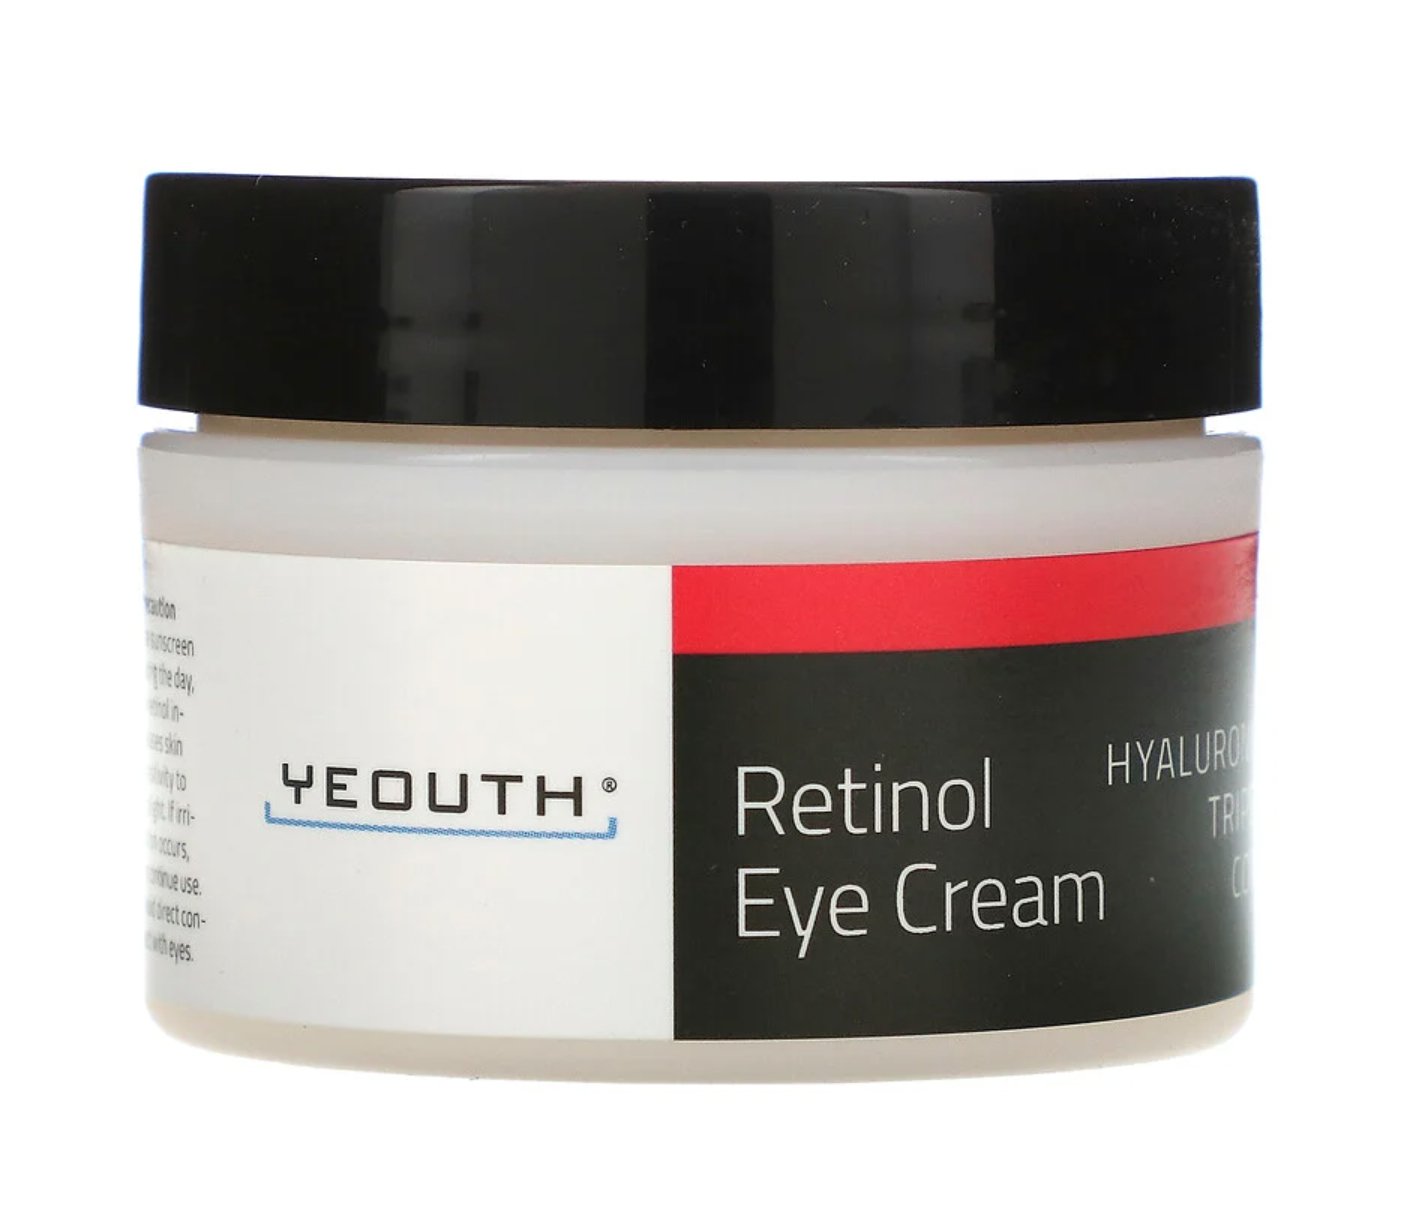 YEOUTH Retinol Eye Cream 30ml (1 fl oz) - The Face Method